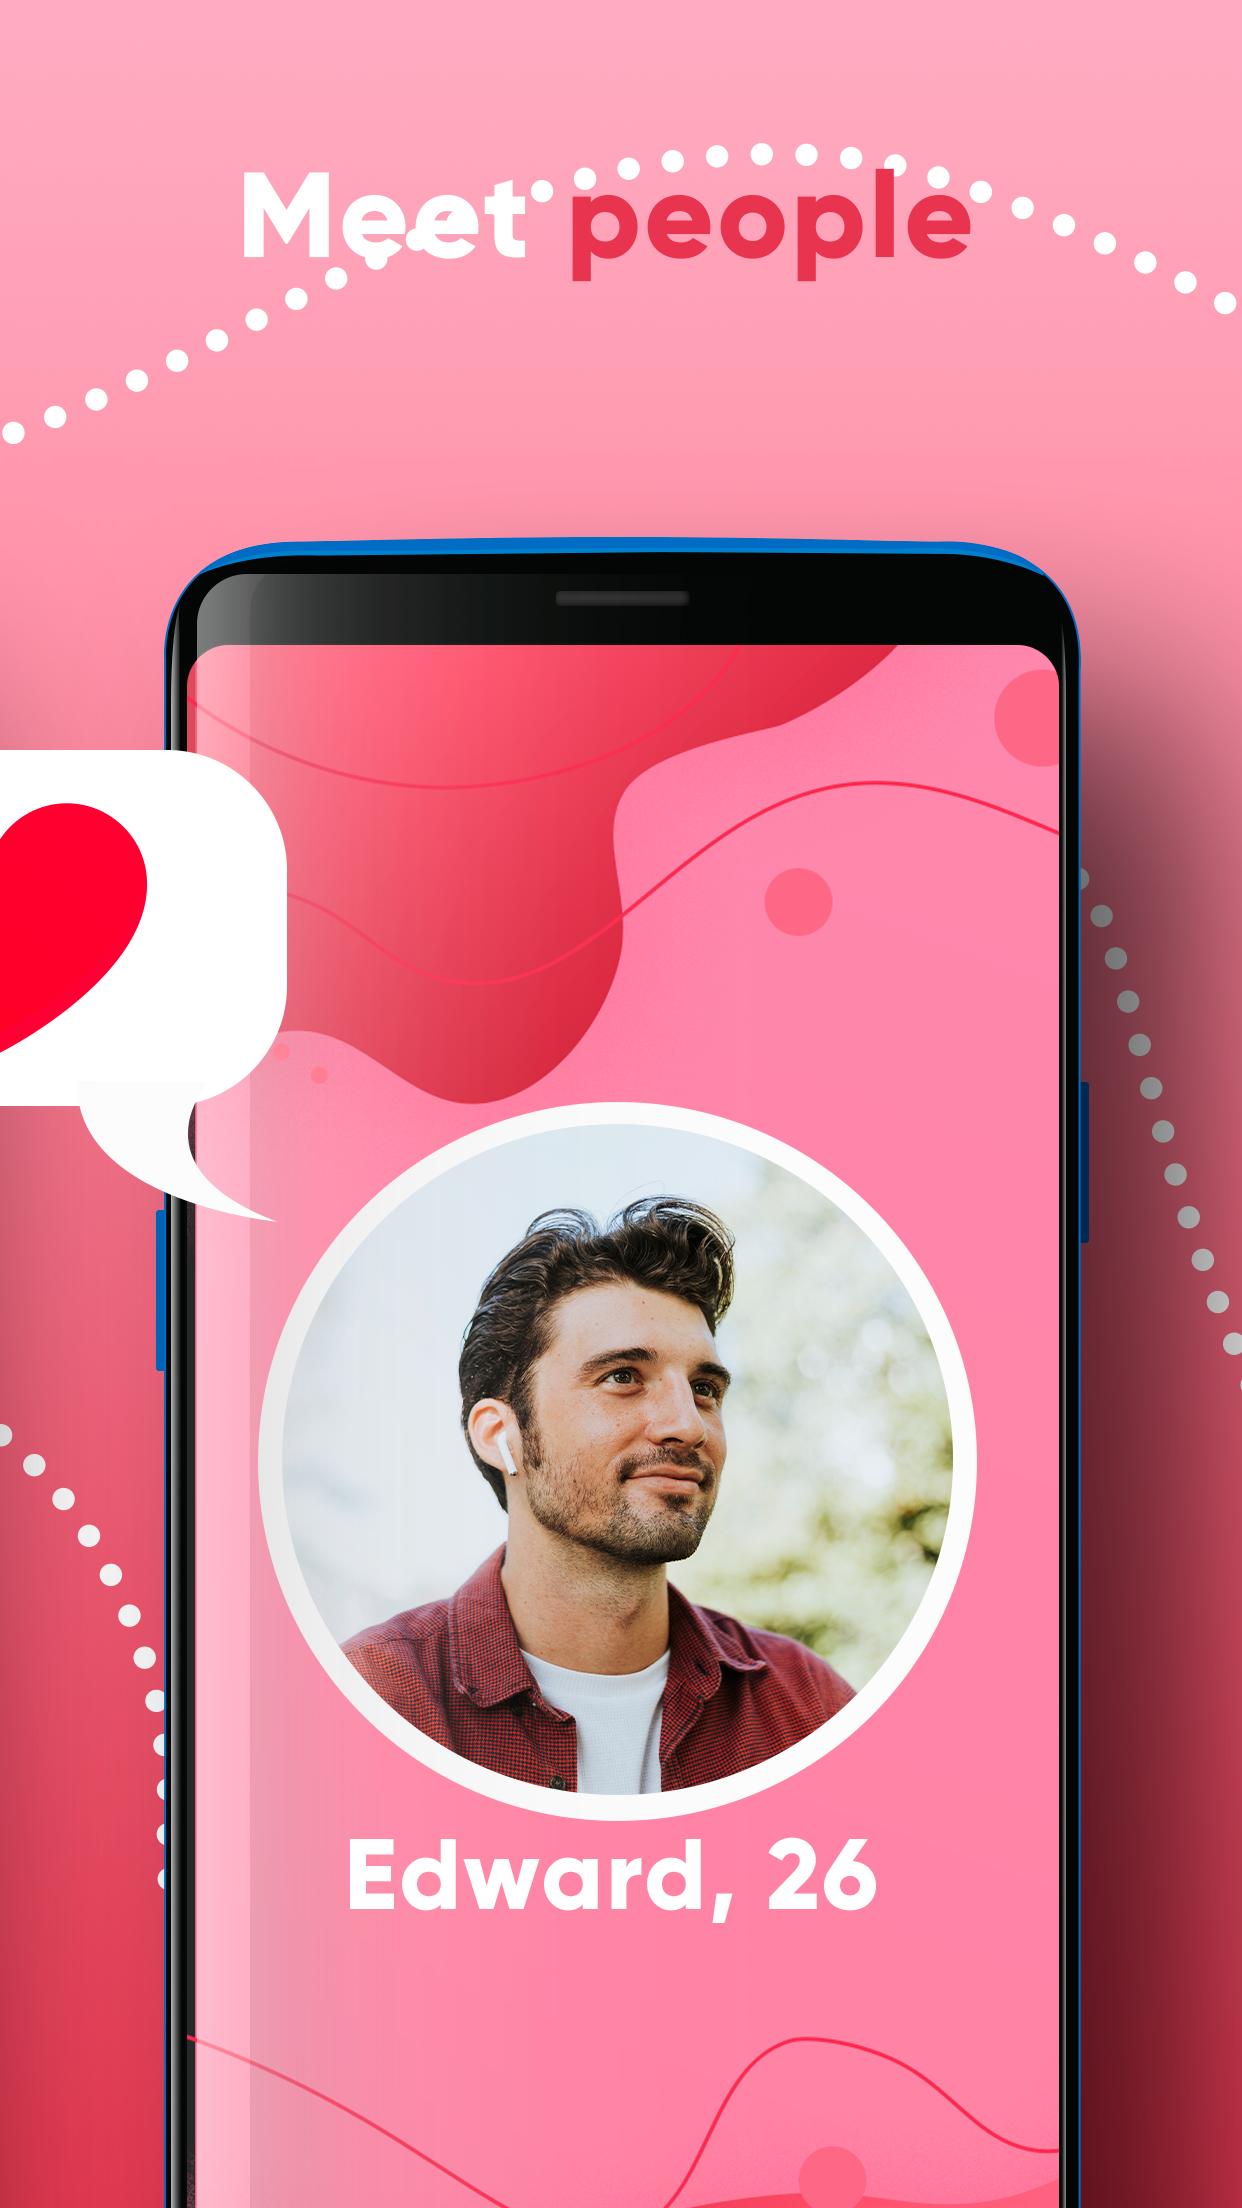 Dating Online App - Find Dates 2.0 Screenshot 7